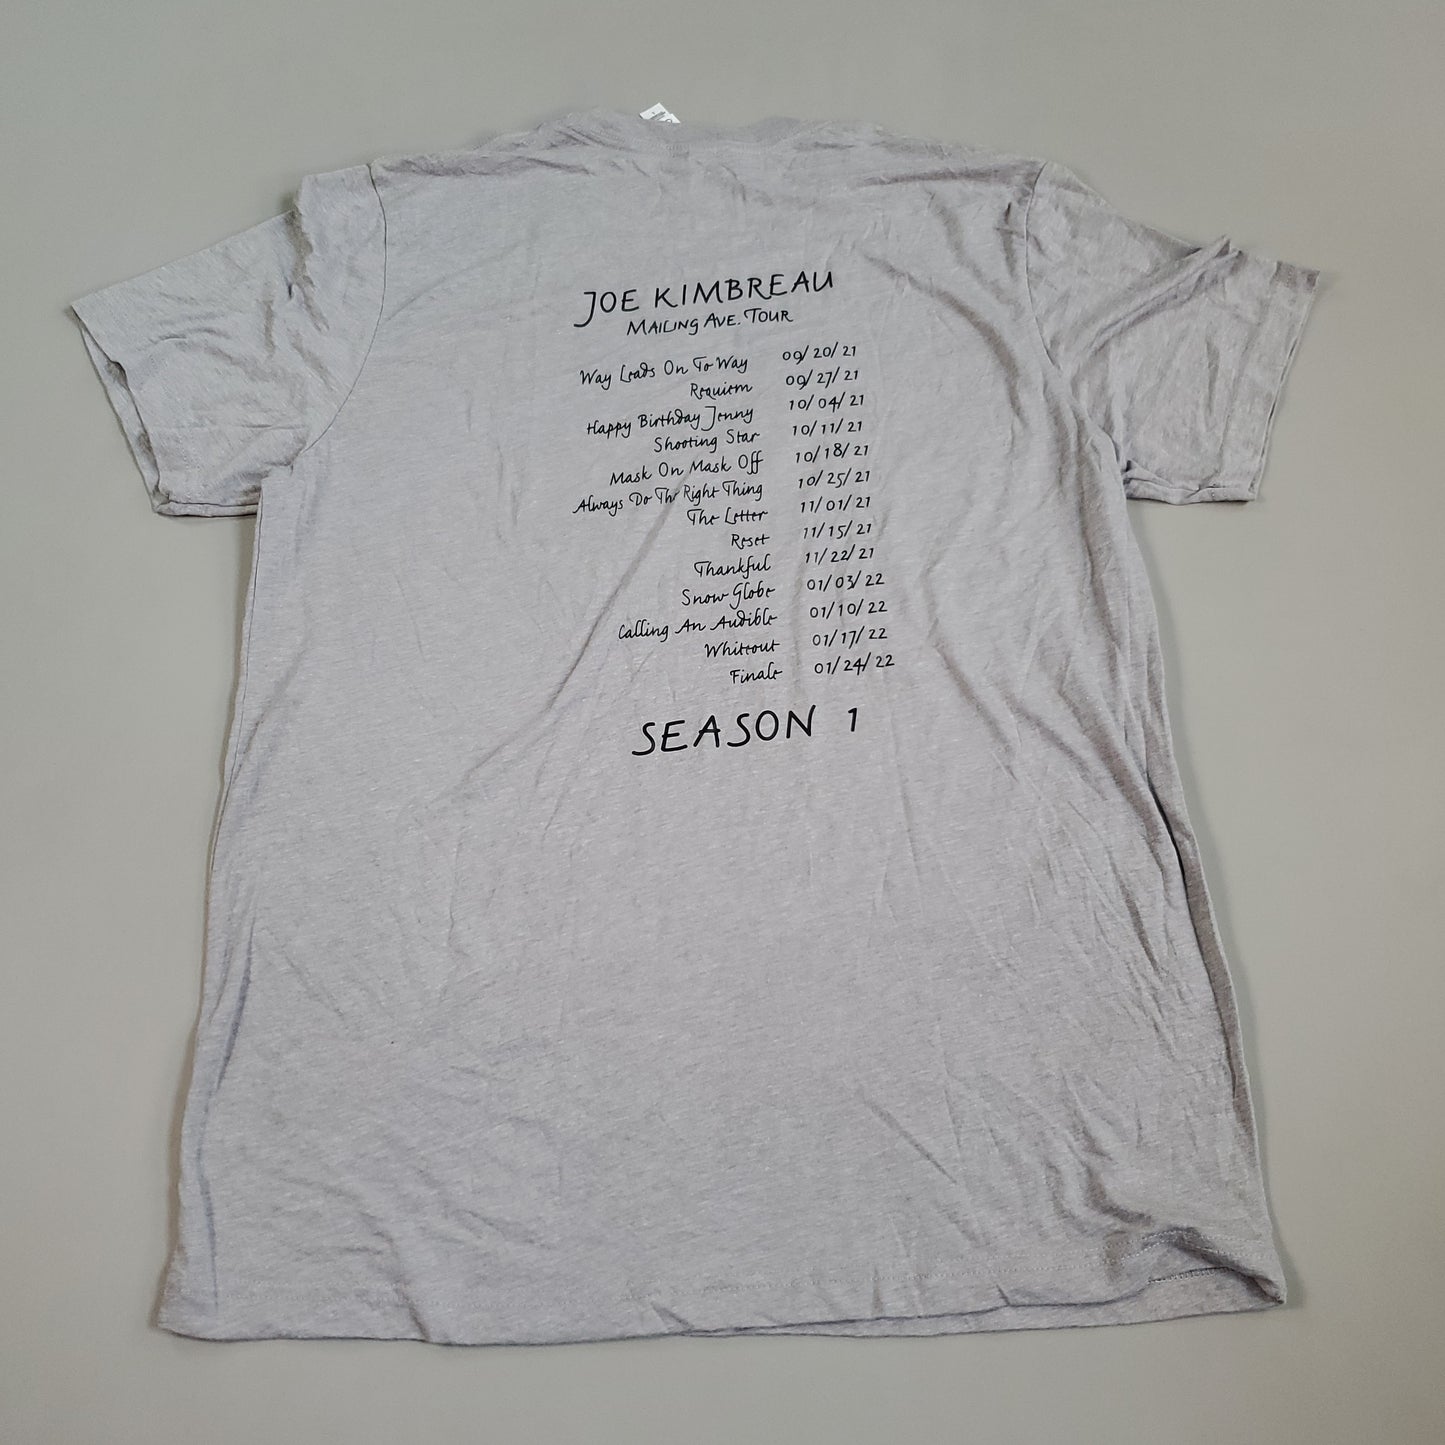 ORDINARY JOE Season 1 Tee Shirt Joe Kimbreau Mailing Ave Tour Sz L Gray (New Other)